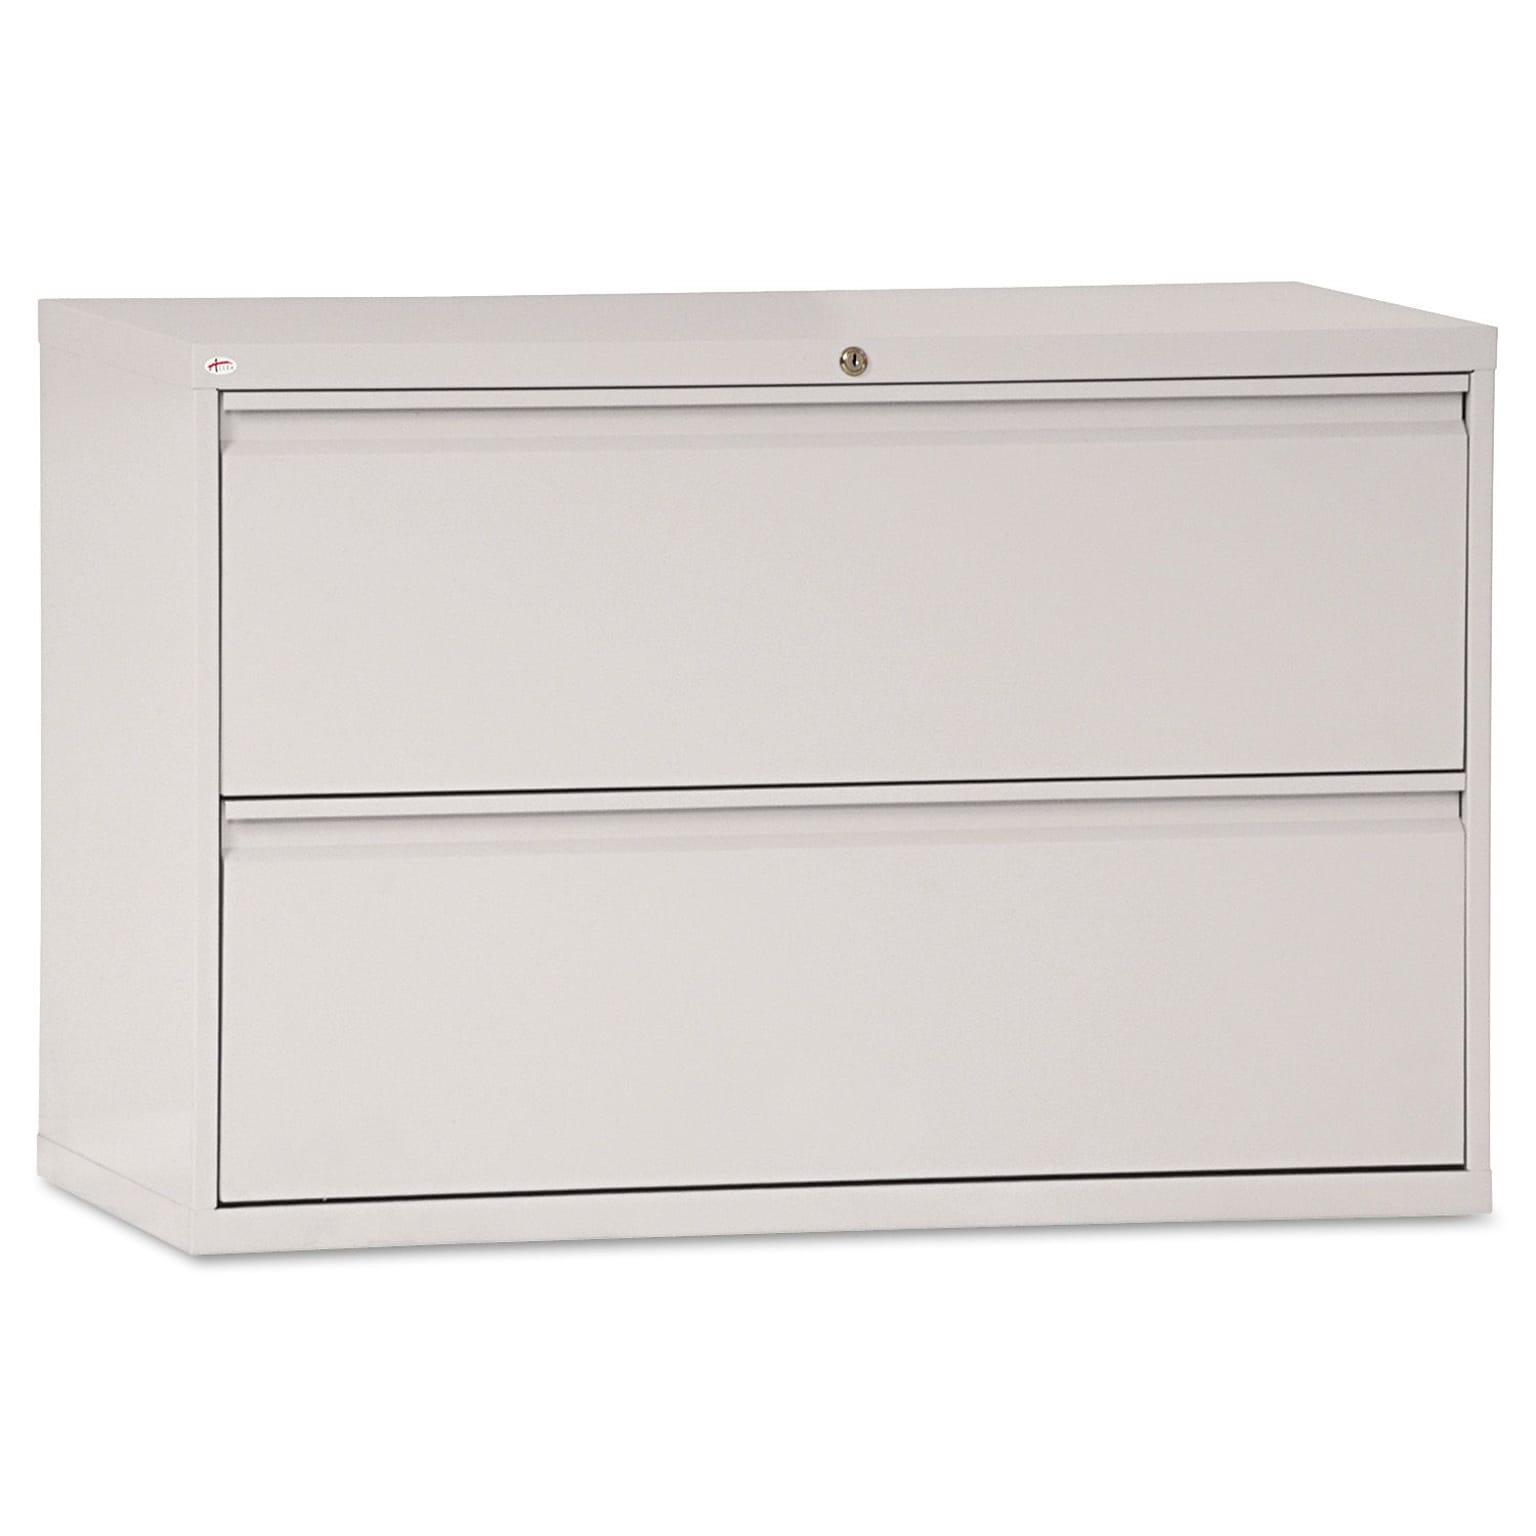 Alera® 2-Drawer Lateral File Cabinet; Light Gray, Letter/Legal (ALELF4229LG)